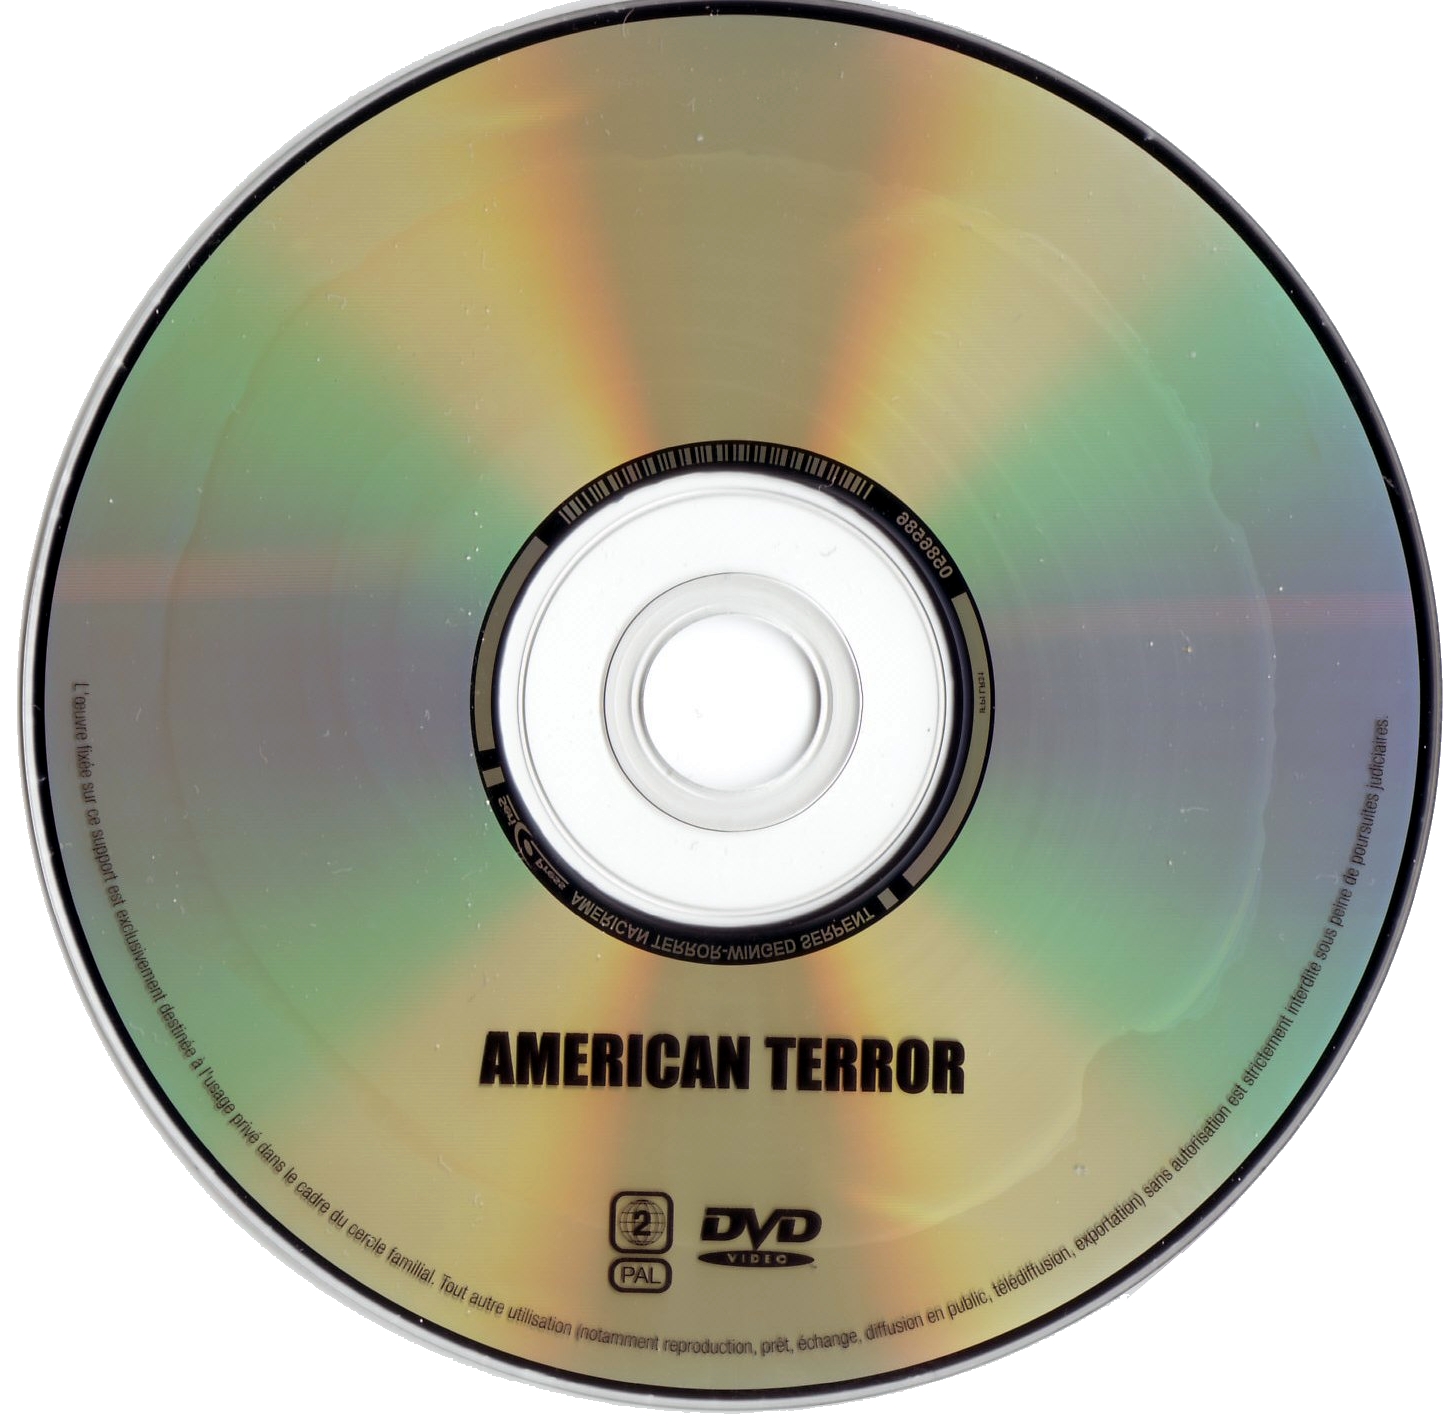 American terror